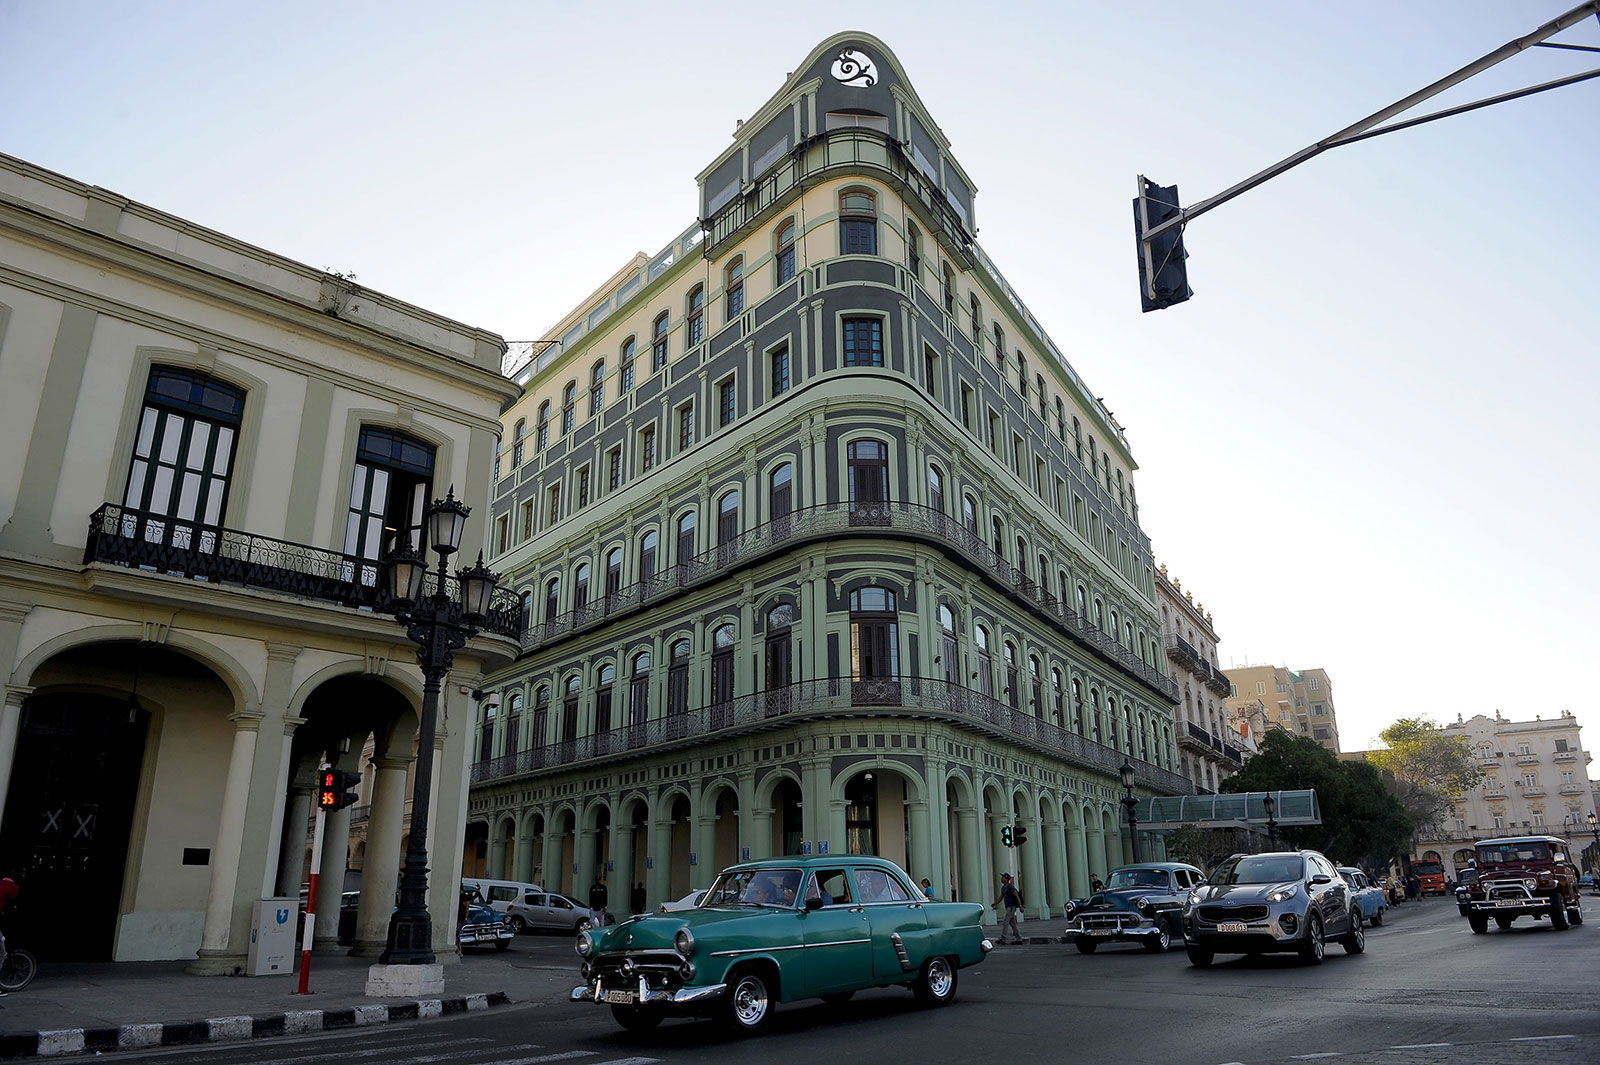 Cars drive past the Saratoga Hotel in Havana on January 26, 2017.